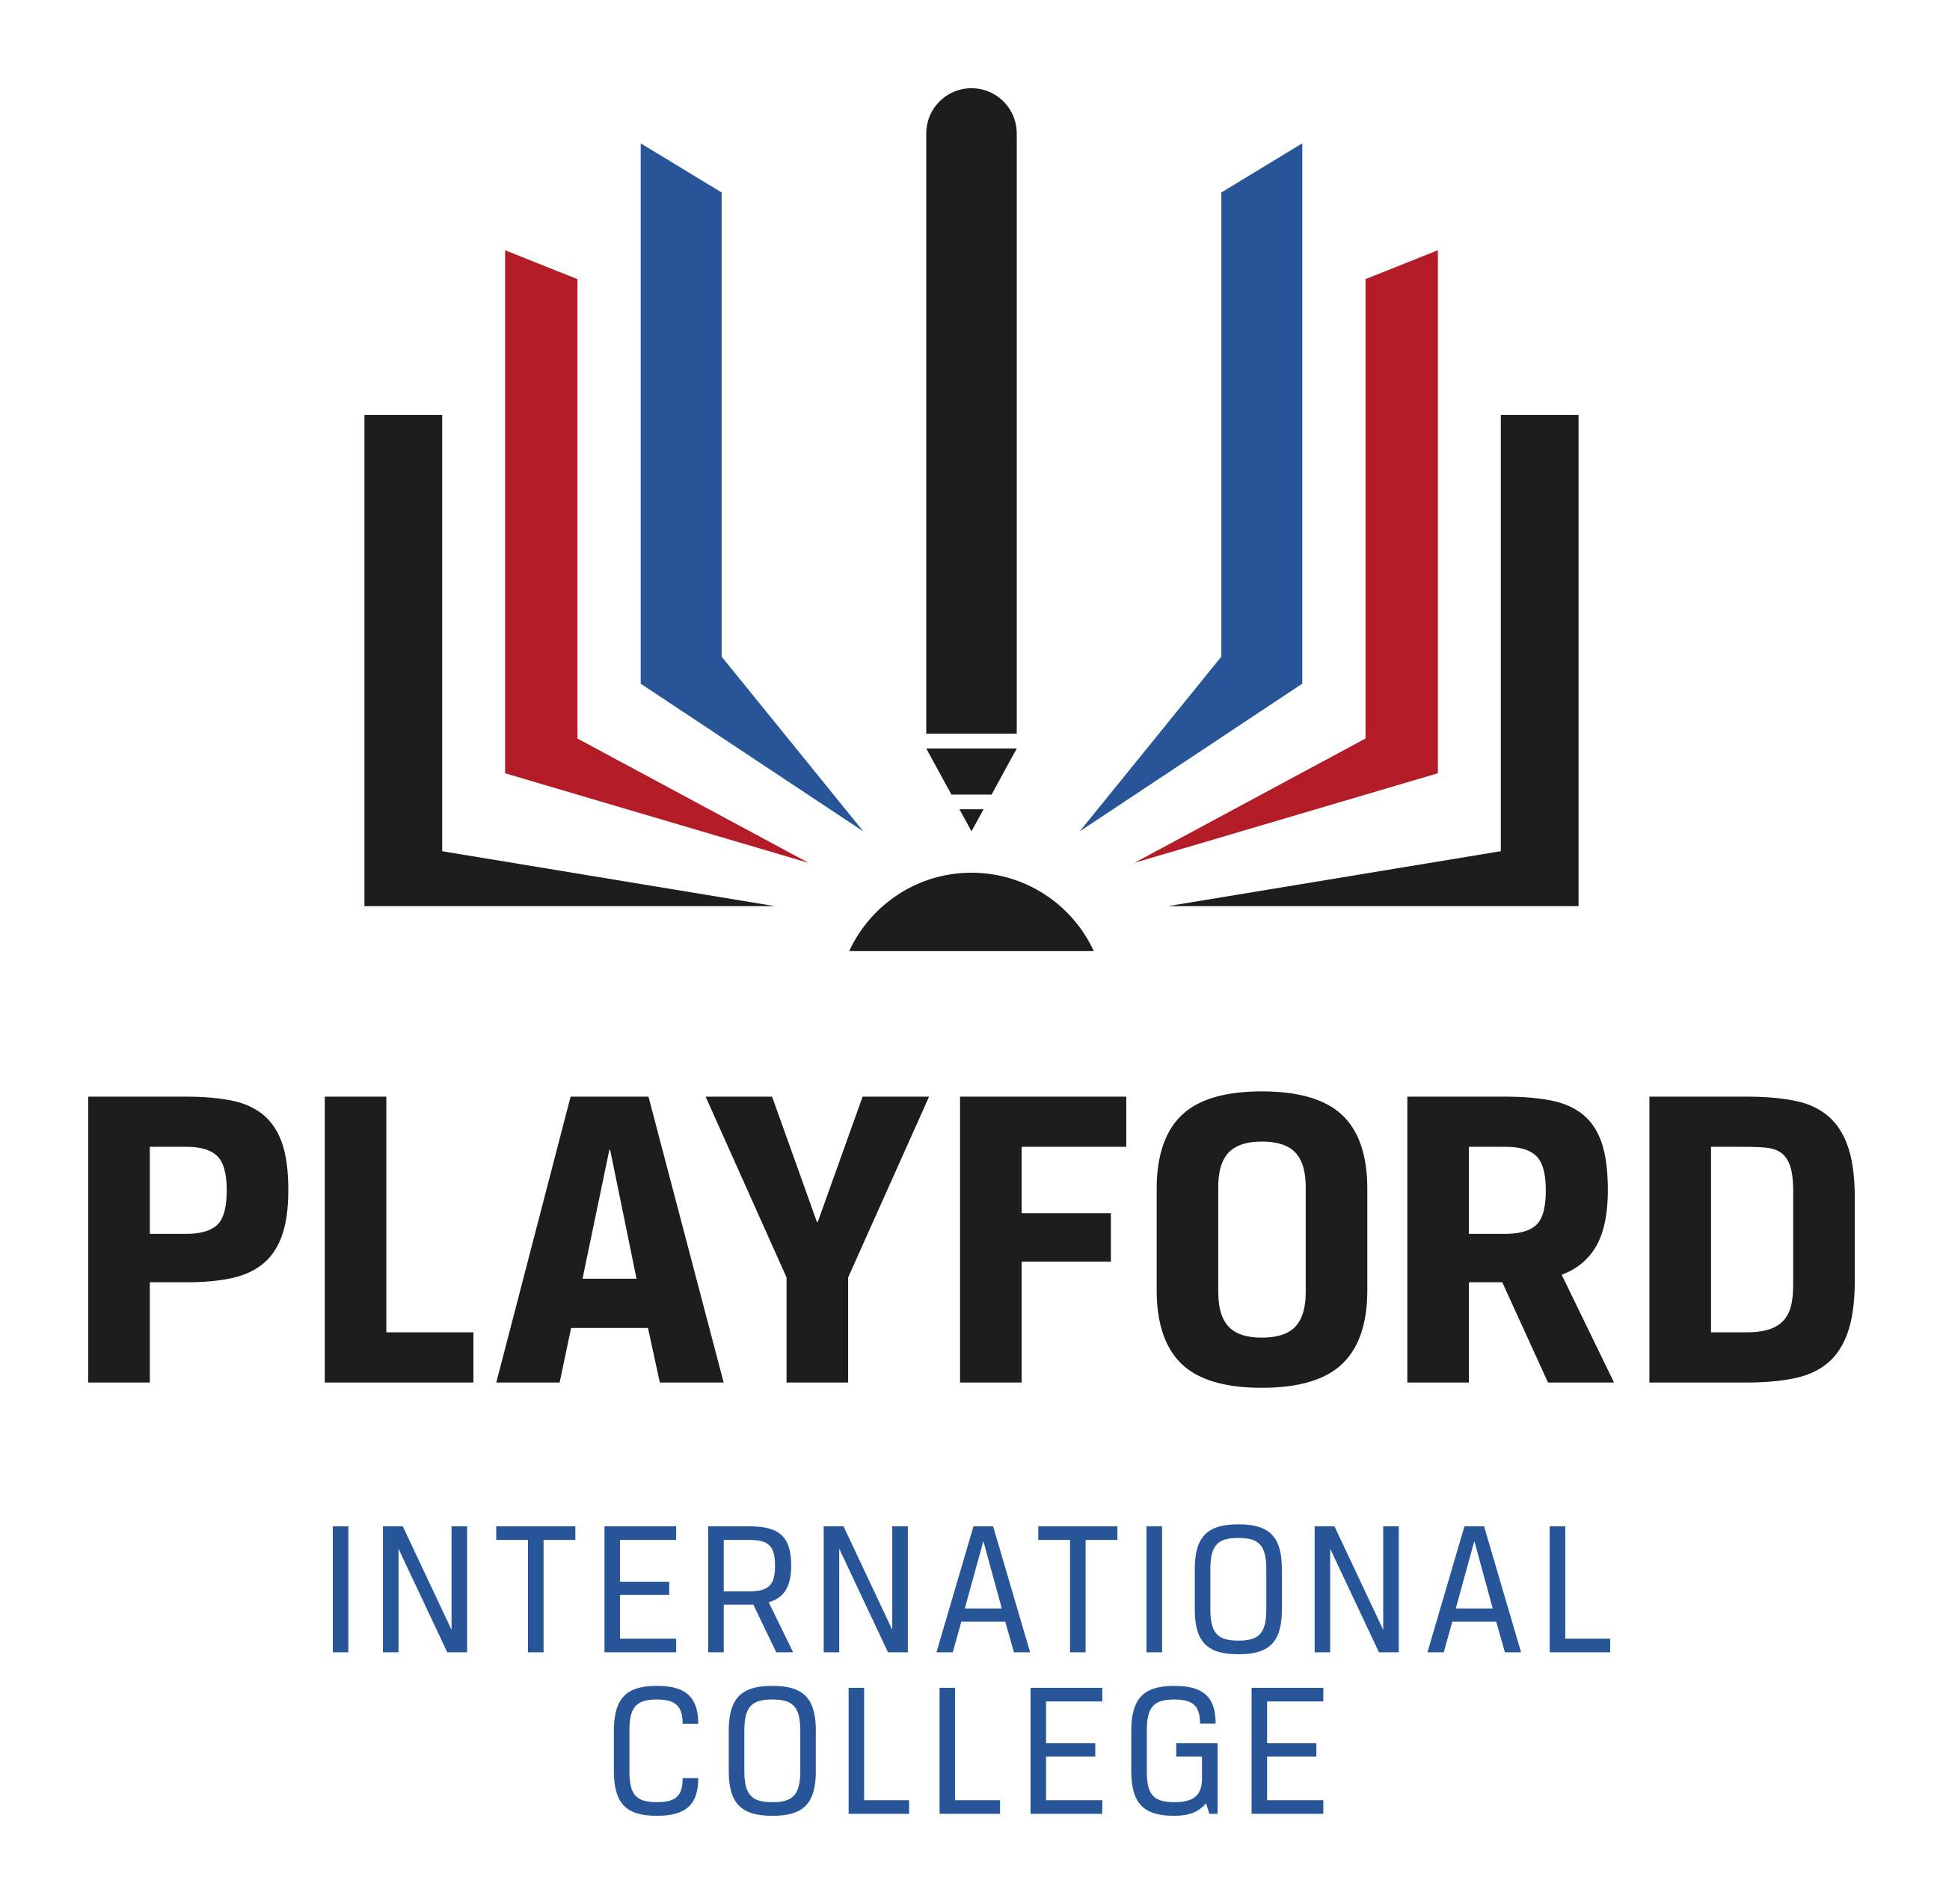 Playford International College